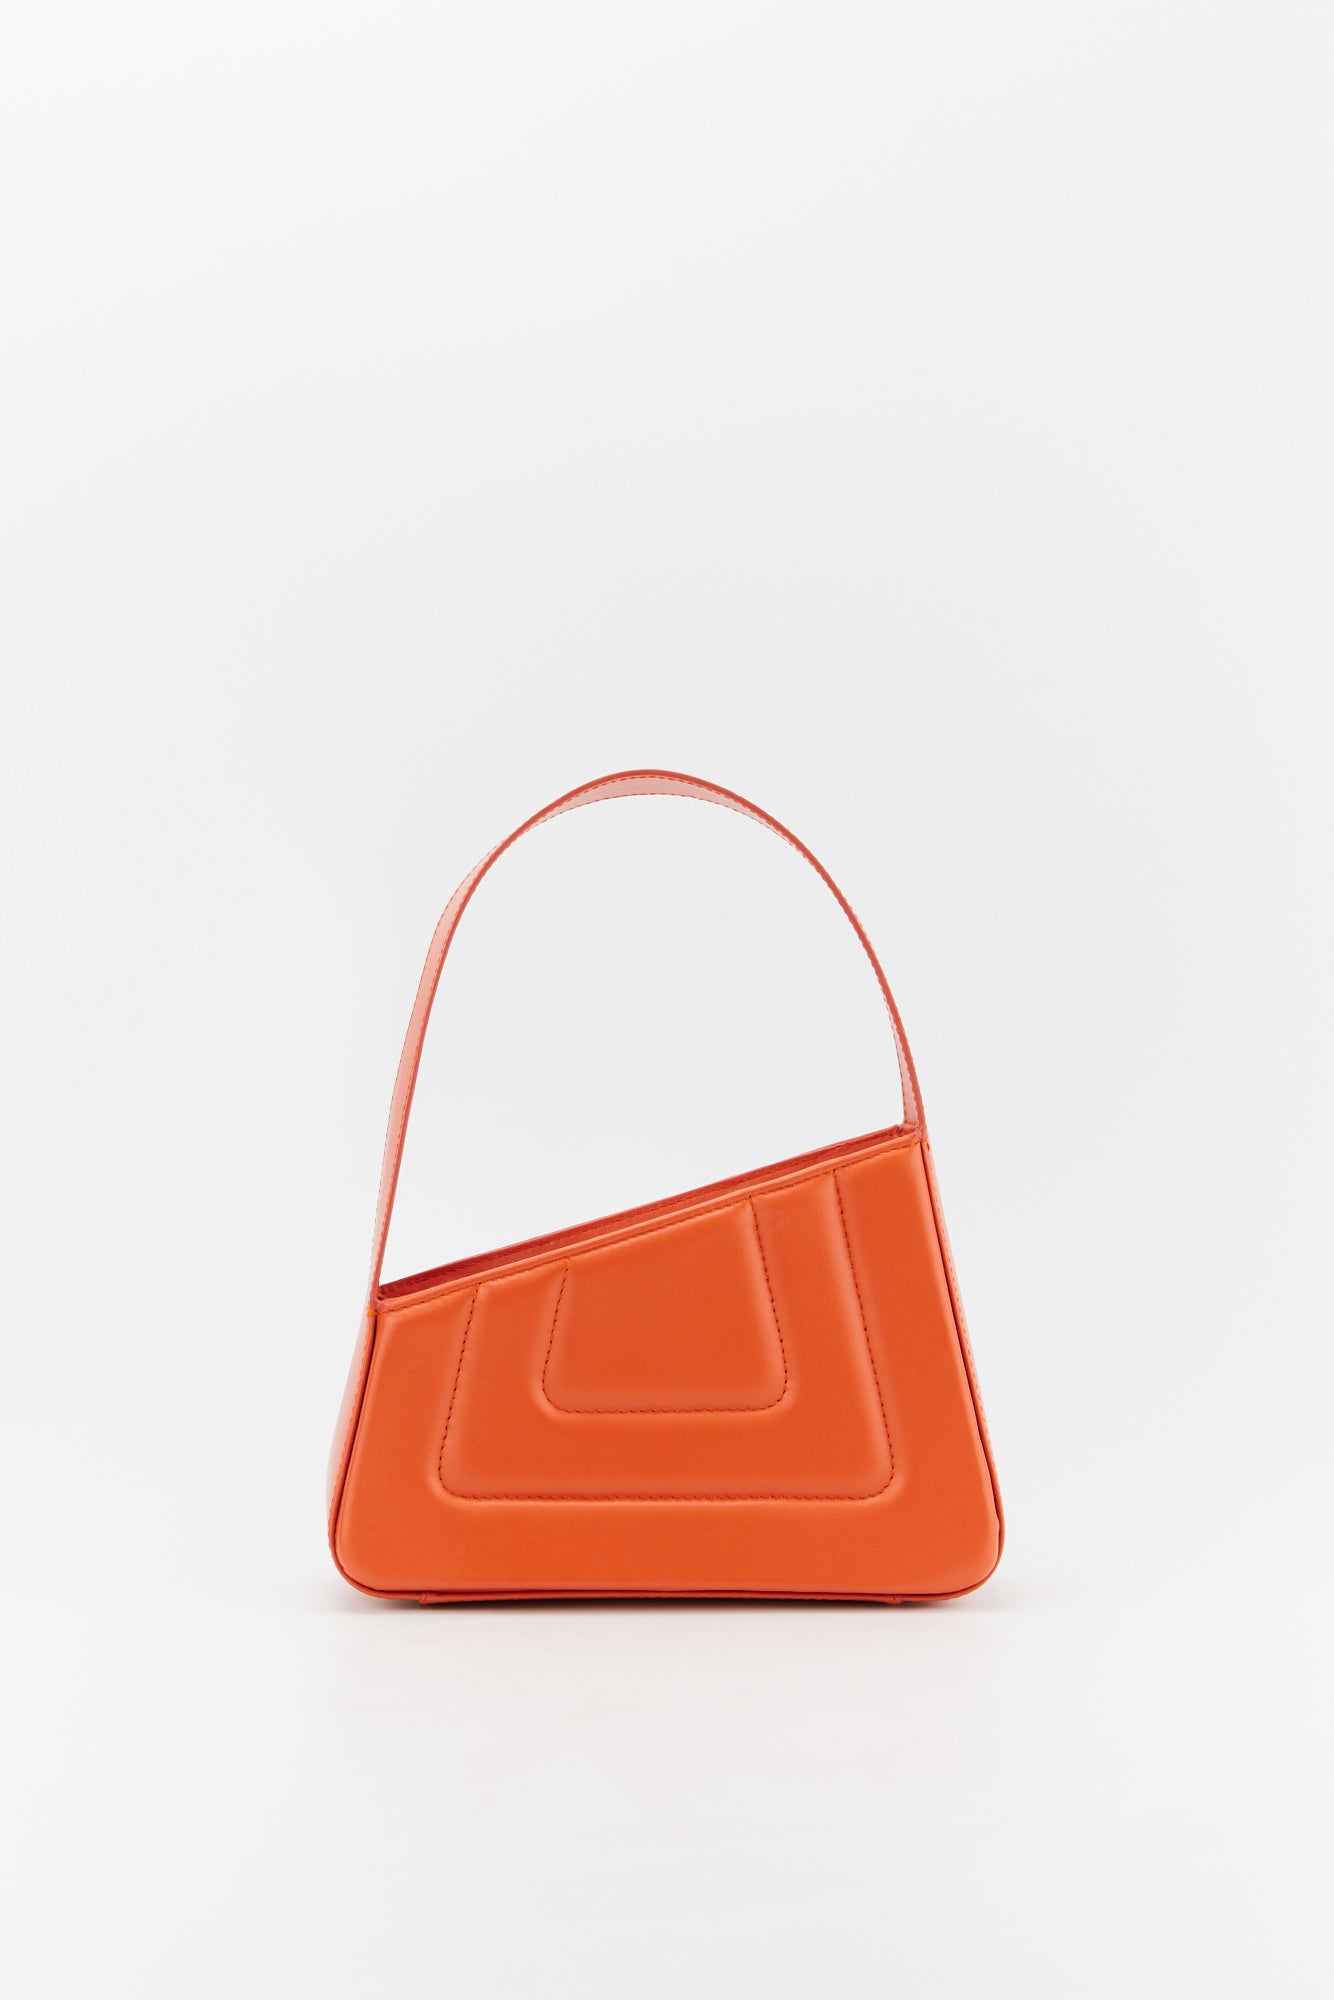 ORANGE Asymmetric Leather Quilted Mini Bag